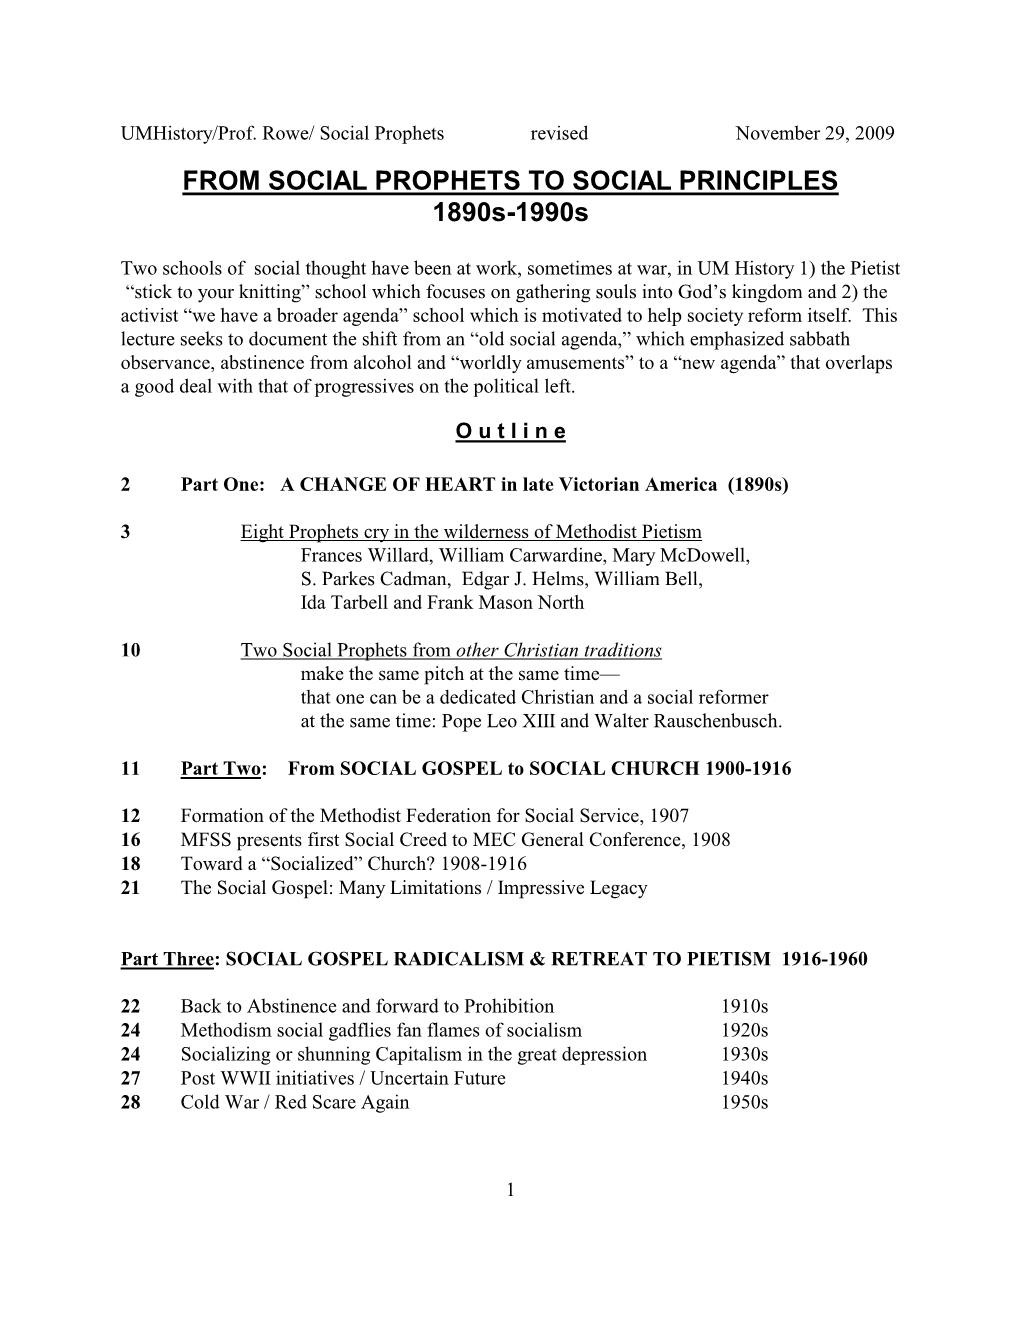 Form Social Prophets to Soc Princ 1890-1990-K Rowe